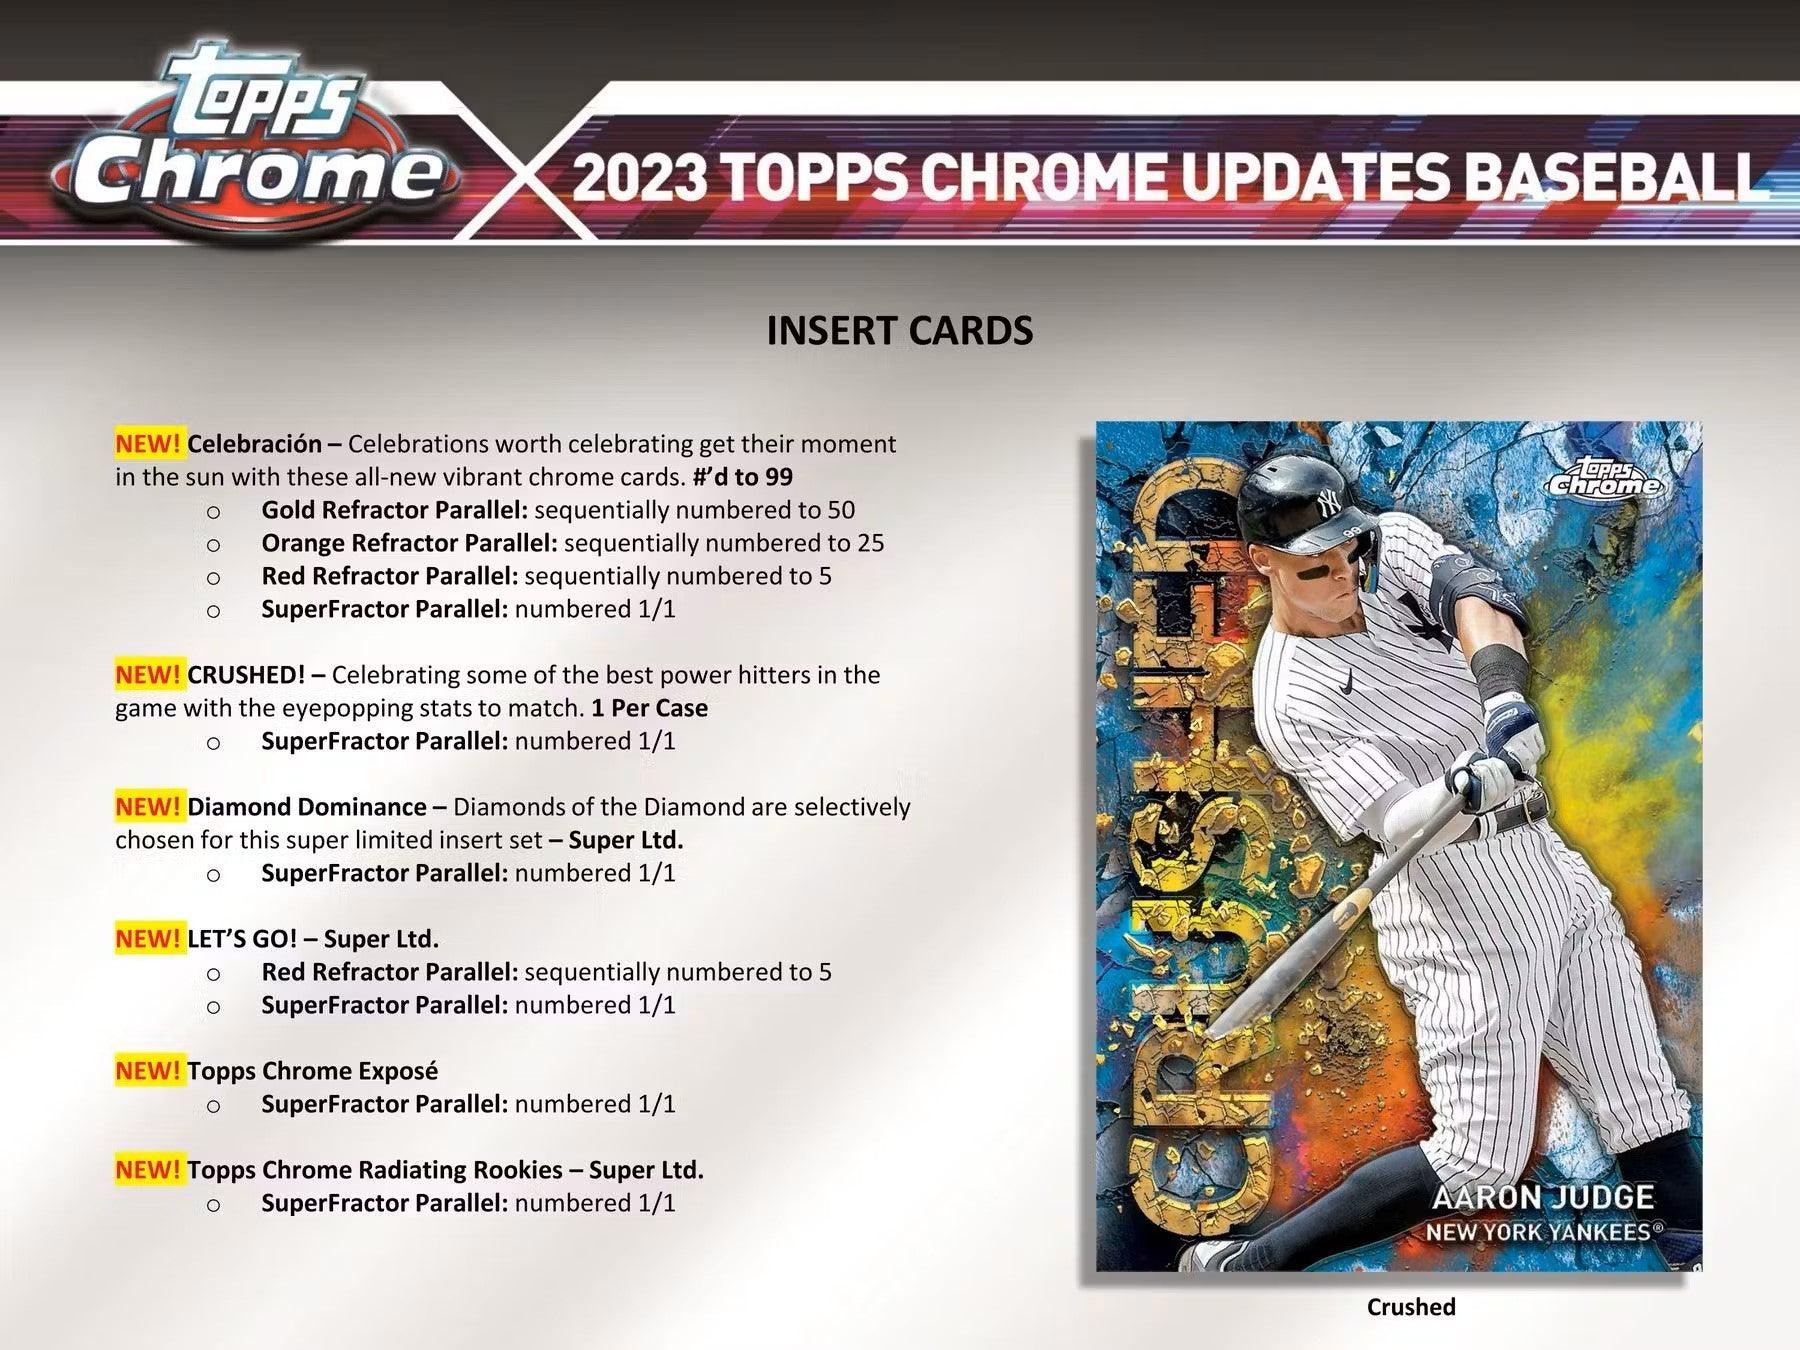 Baseball - 2023 - Topps Chrome Update Series - Hobby Box (24 Packs) - Hobby Champion Inc